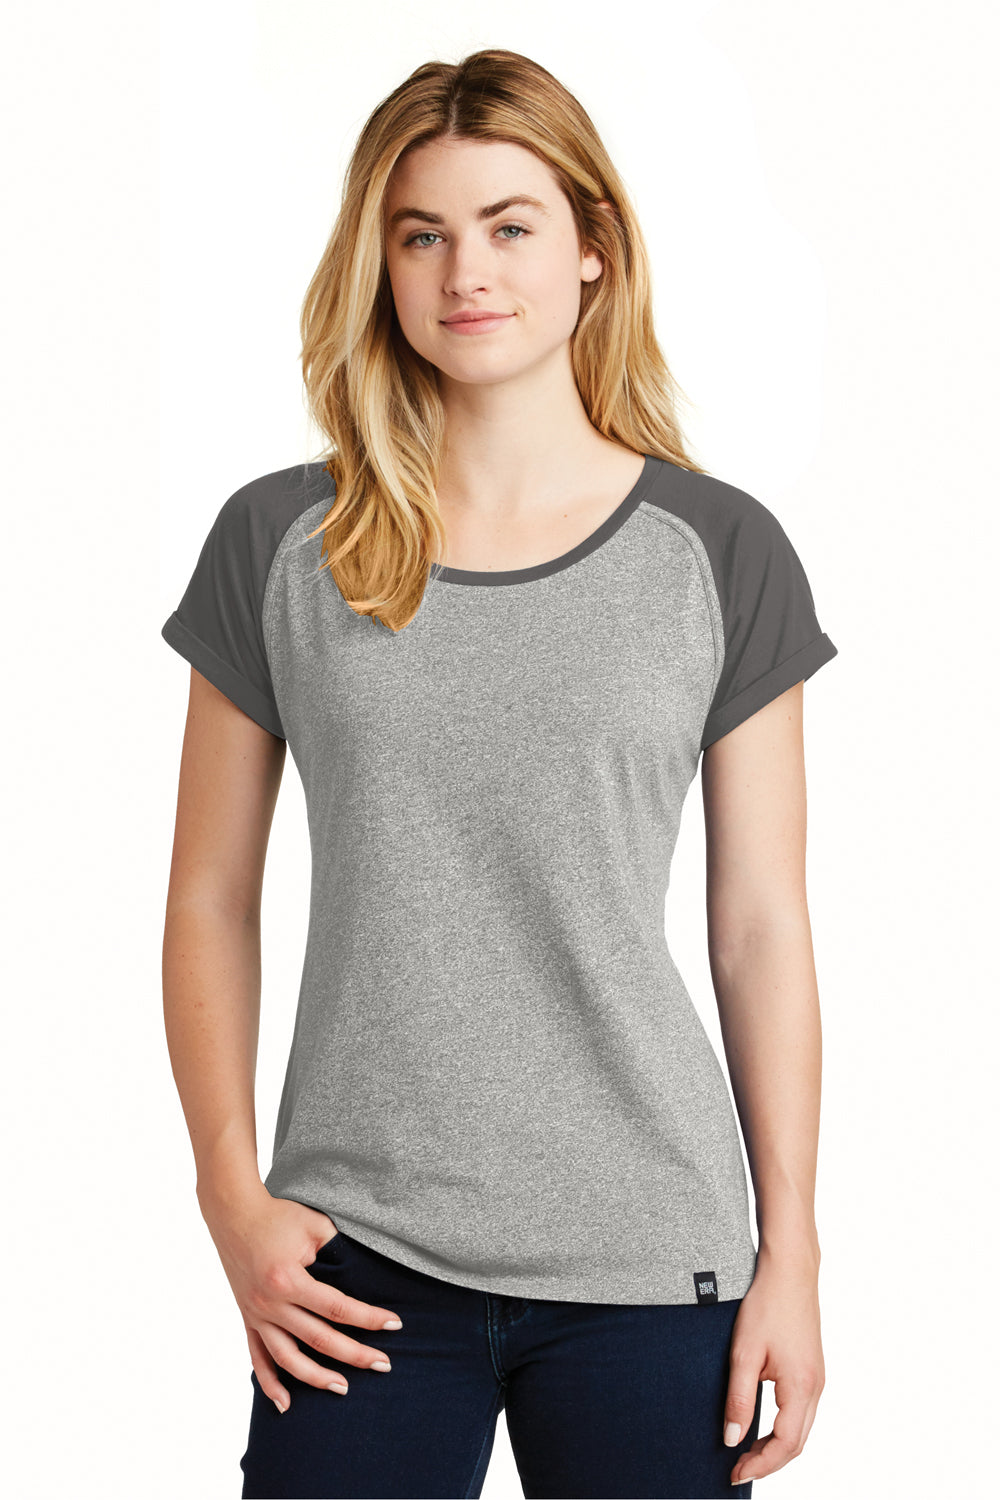 New Era LNEA107 Womens Heritage Short Sleeve Crewneck T-Shirt Graphite Grey/Light Graphite Grey Twist Front